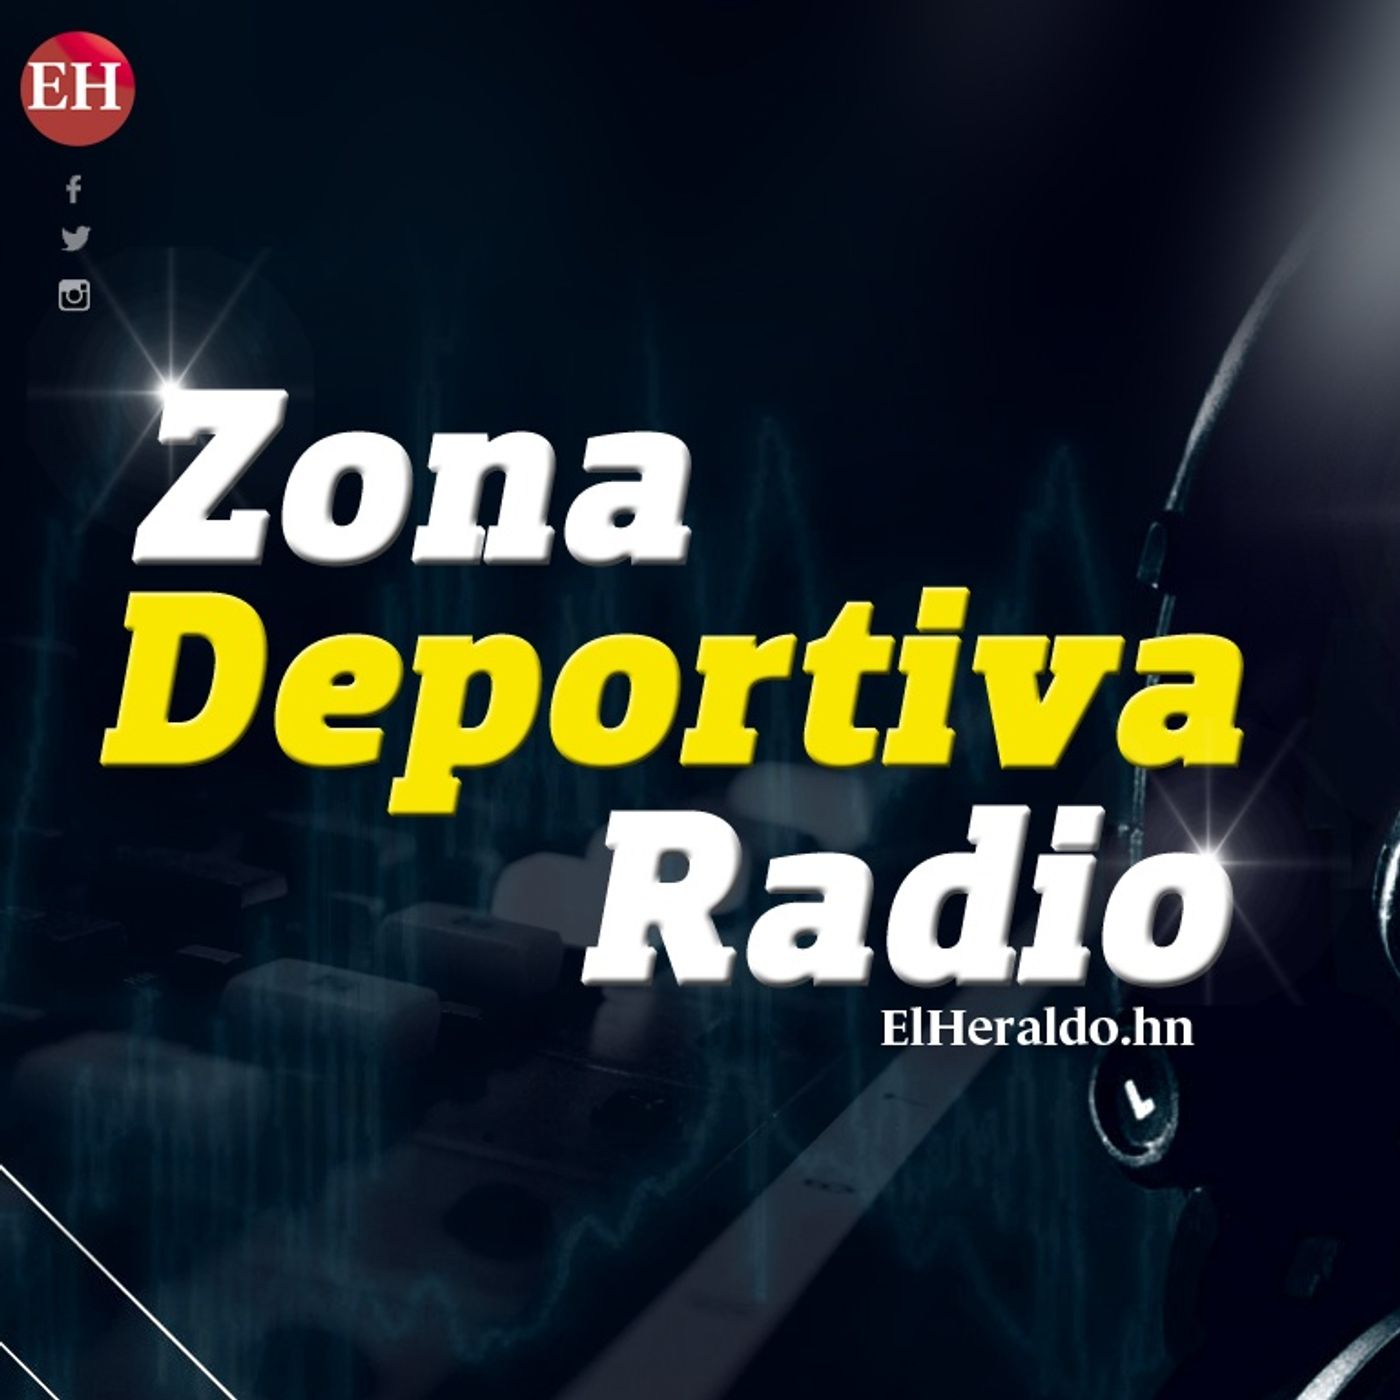 Zona Deportiva Radio/EL Heraldo.hn